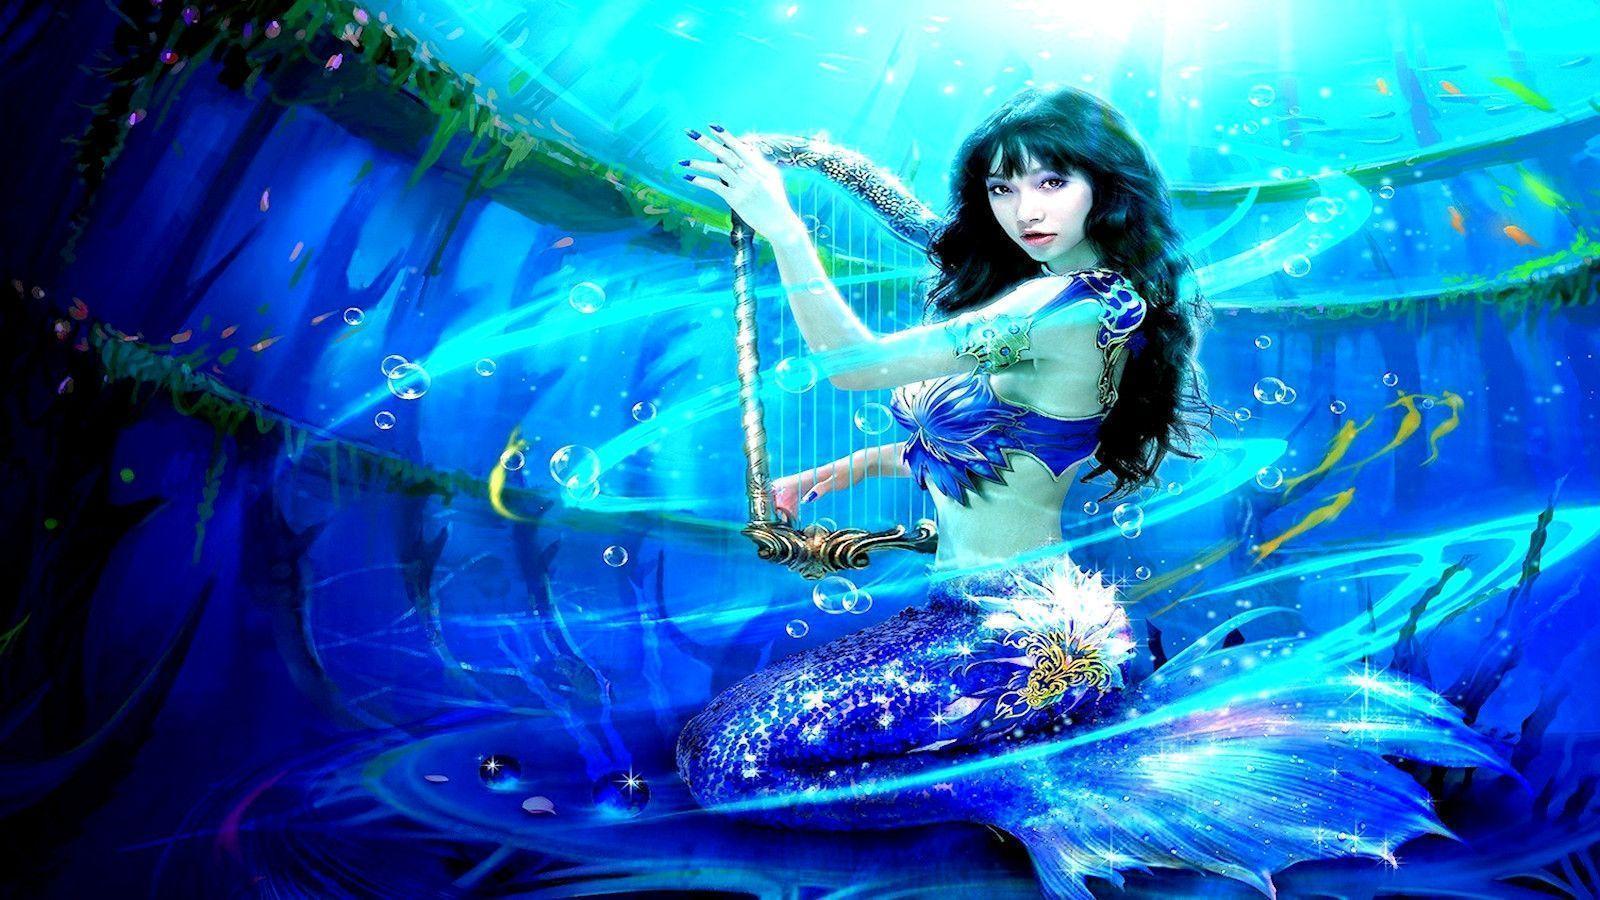 Mermaid with Blue Green Hair - wide 2